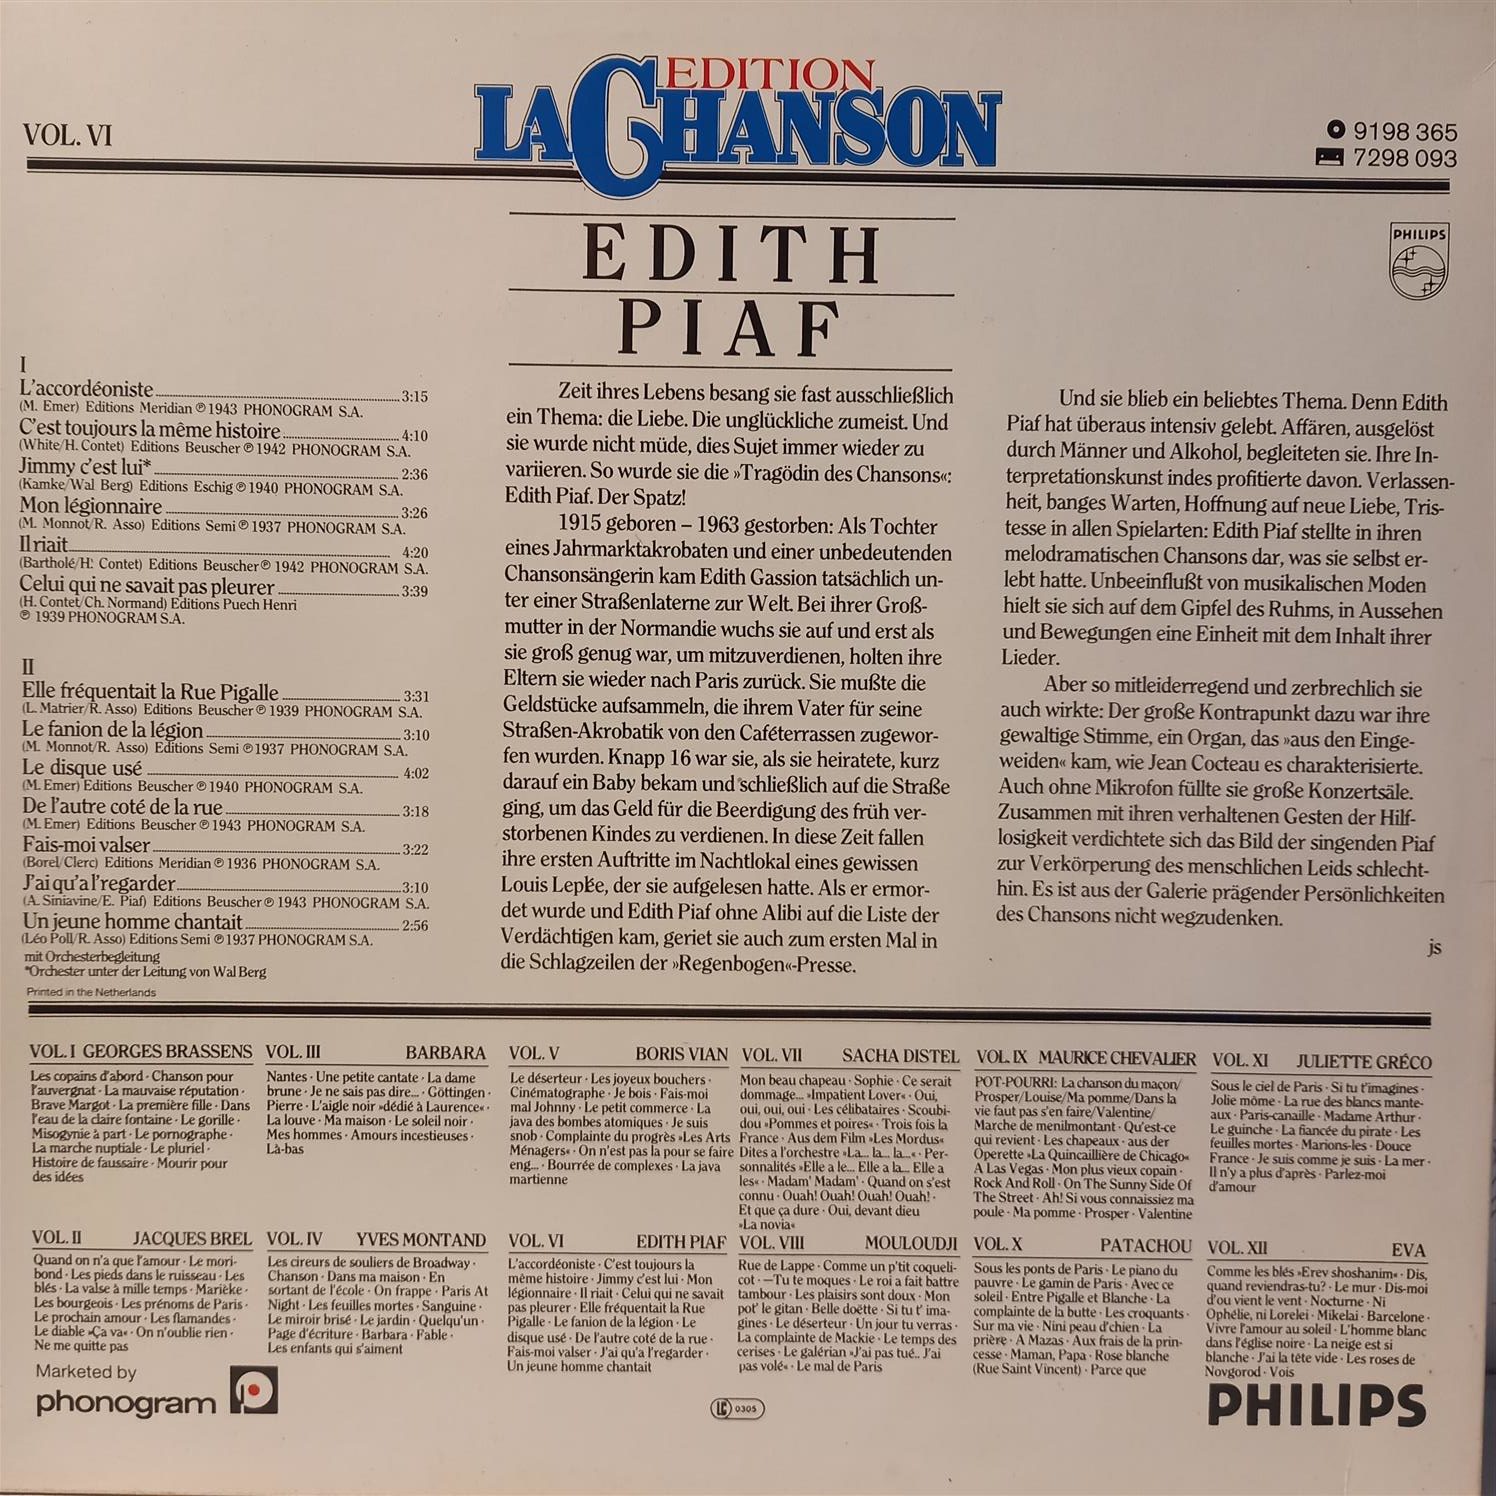 EDITH PIAF – EDITION LA CHANSON VOL. VI ARKA